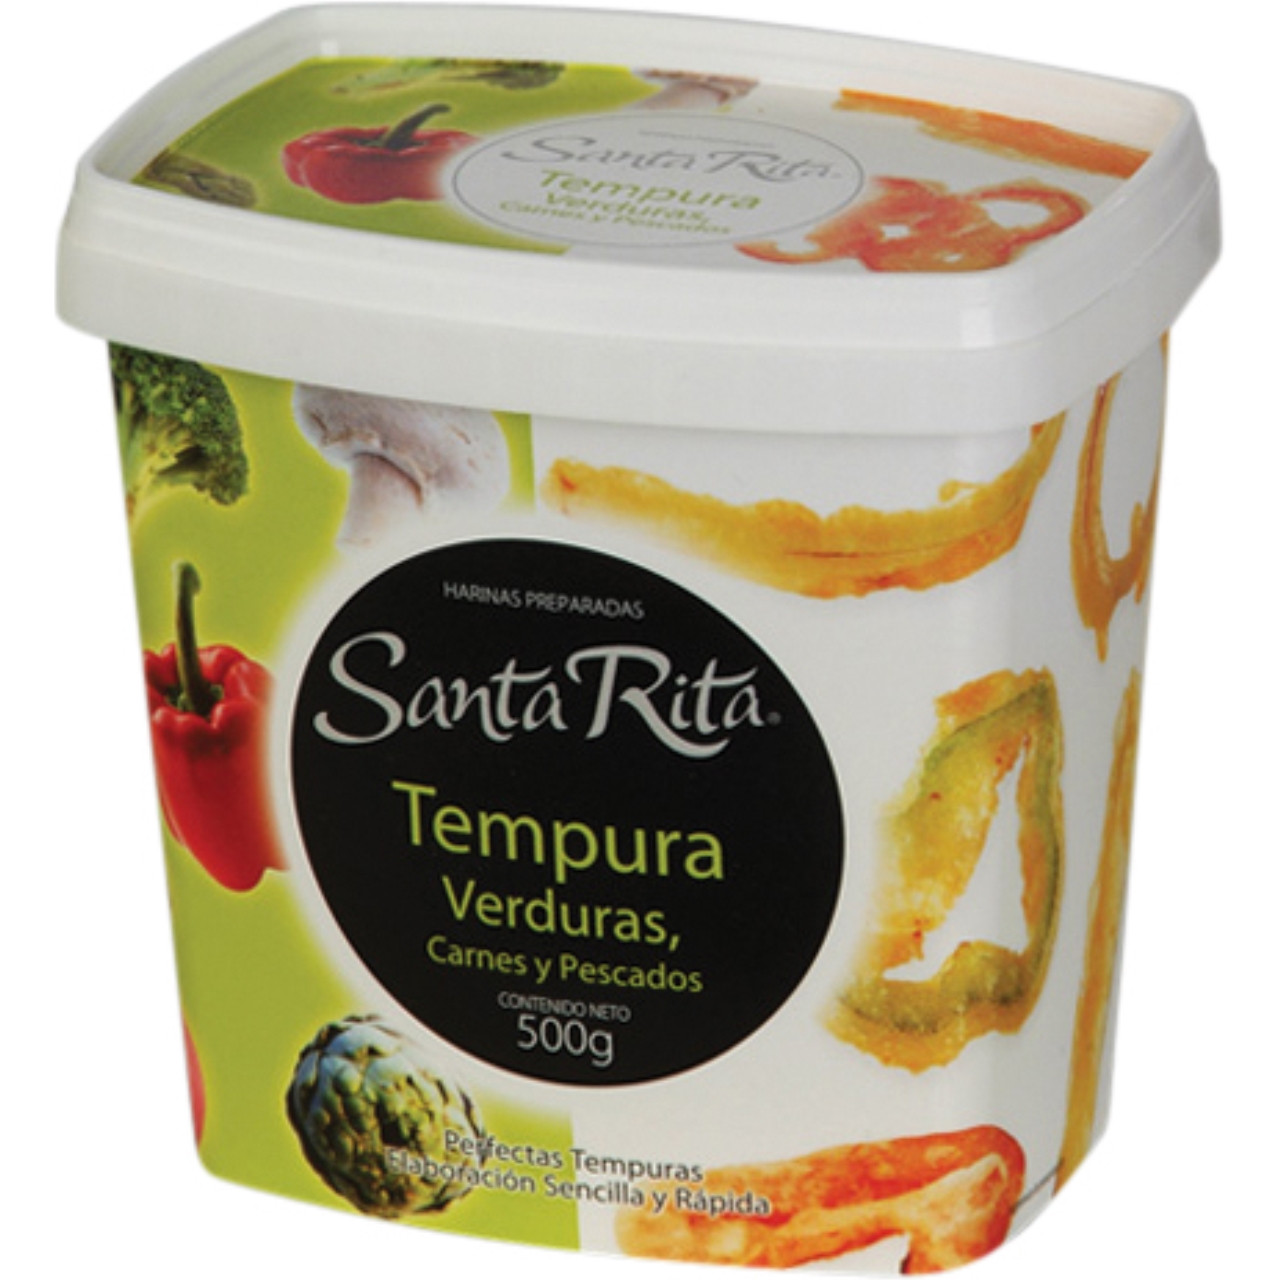 Santa Rita-tempura verdures